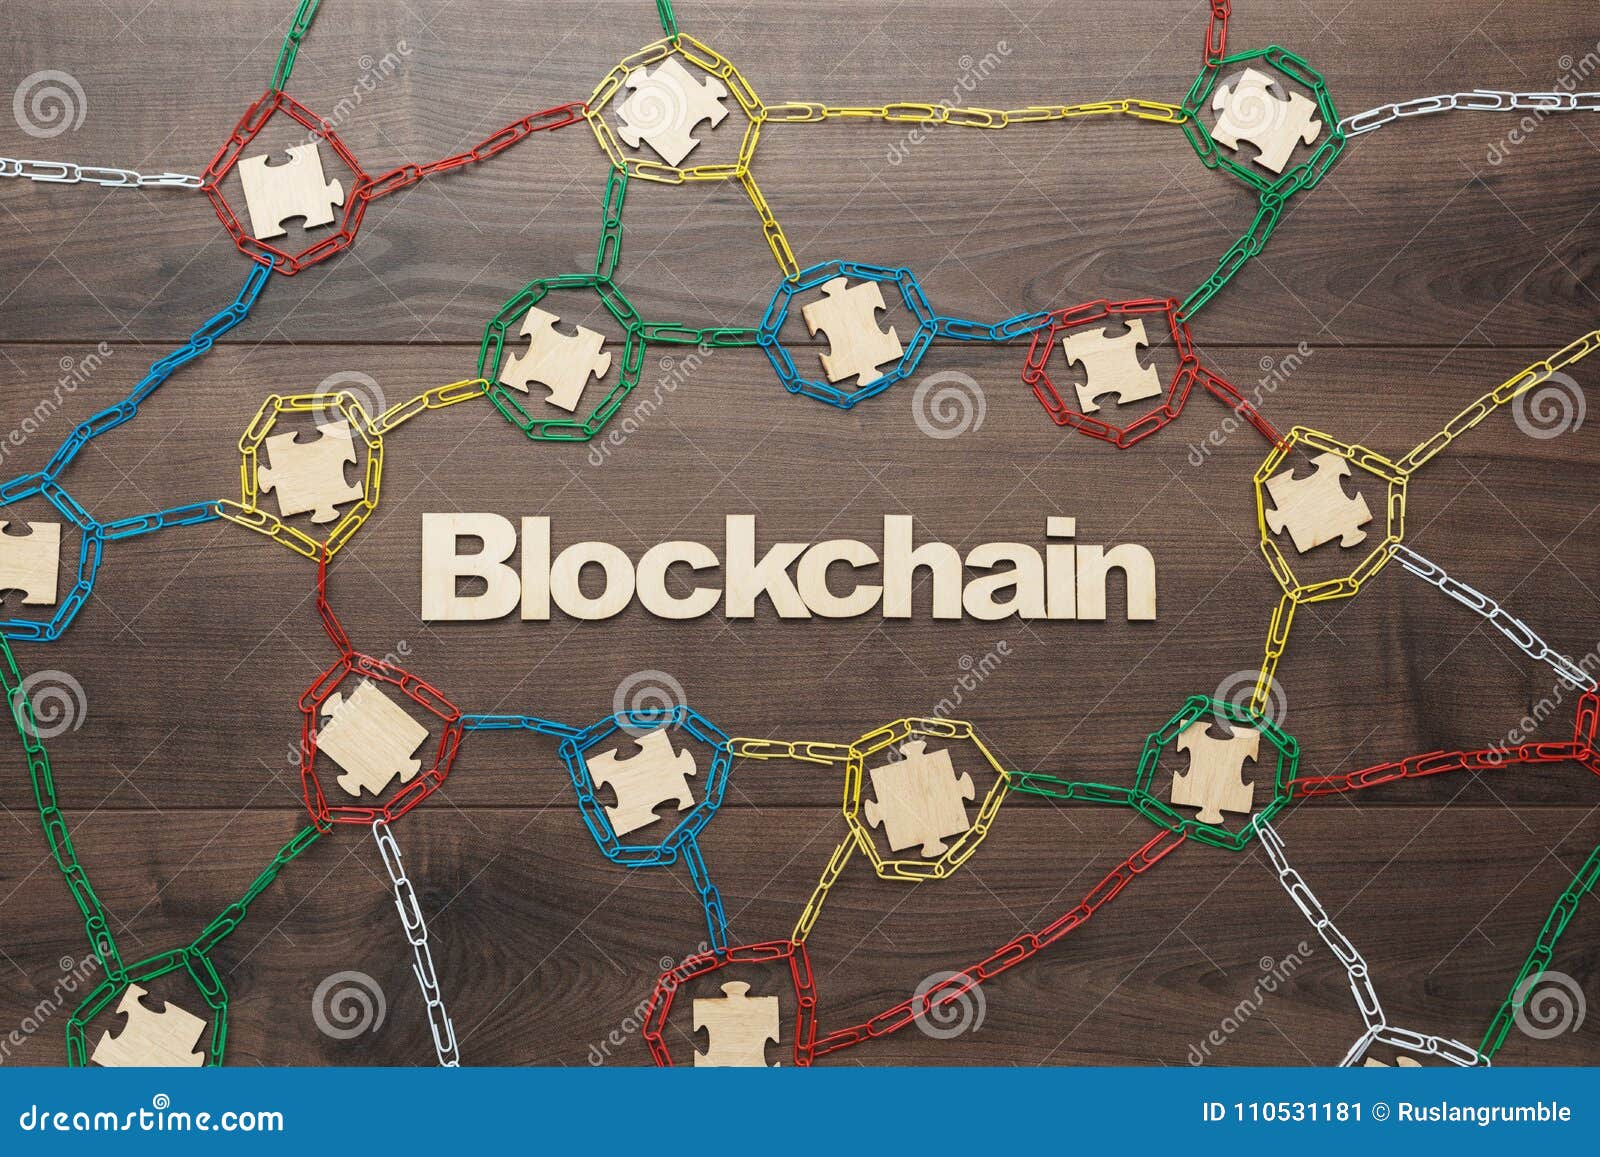 concept of blockchain